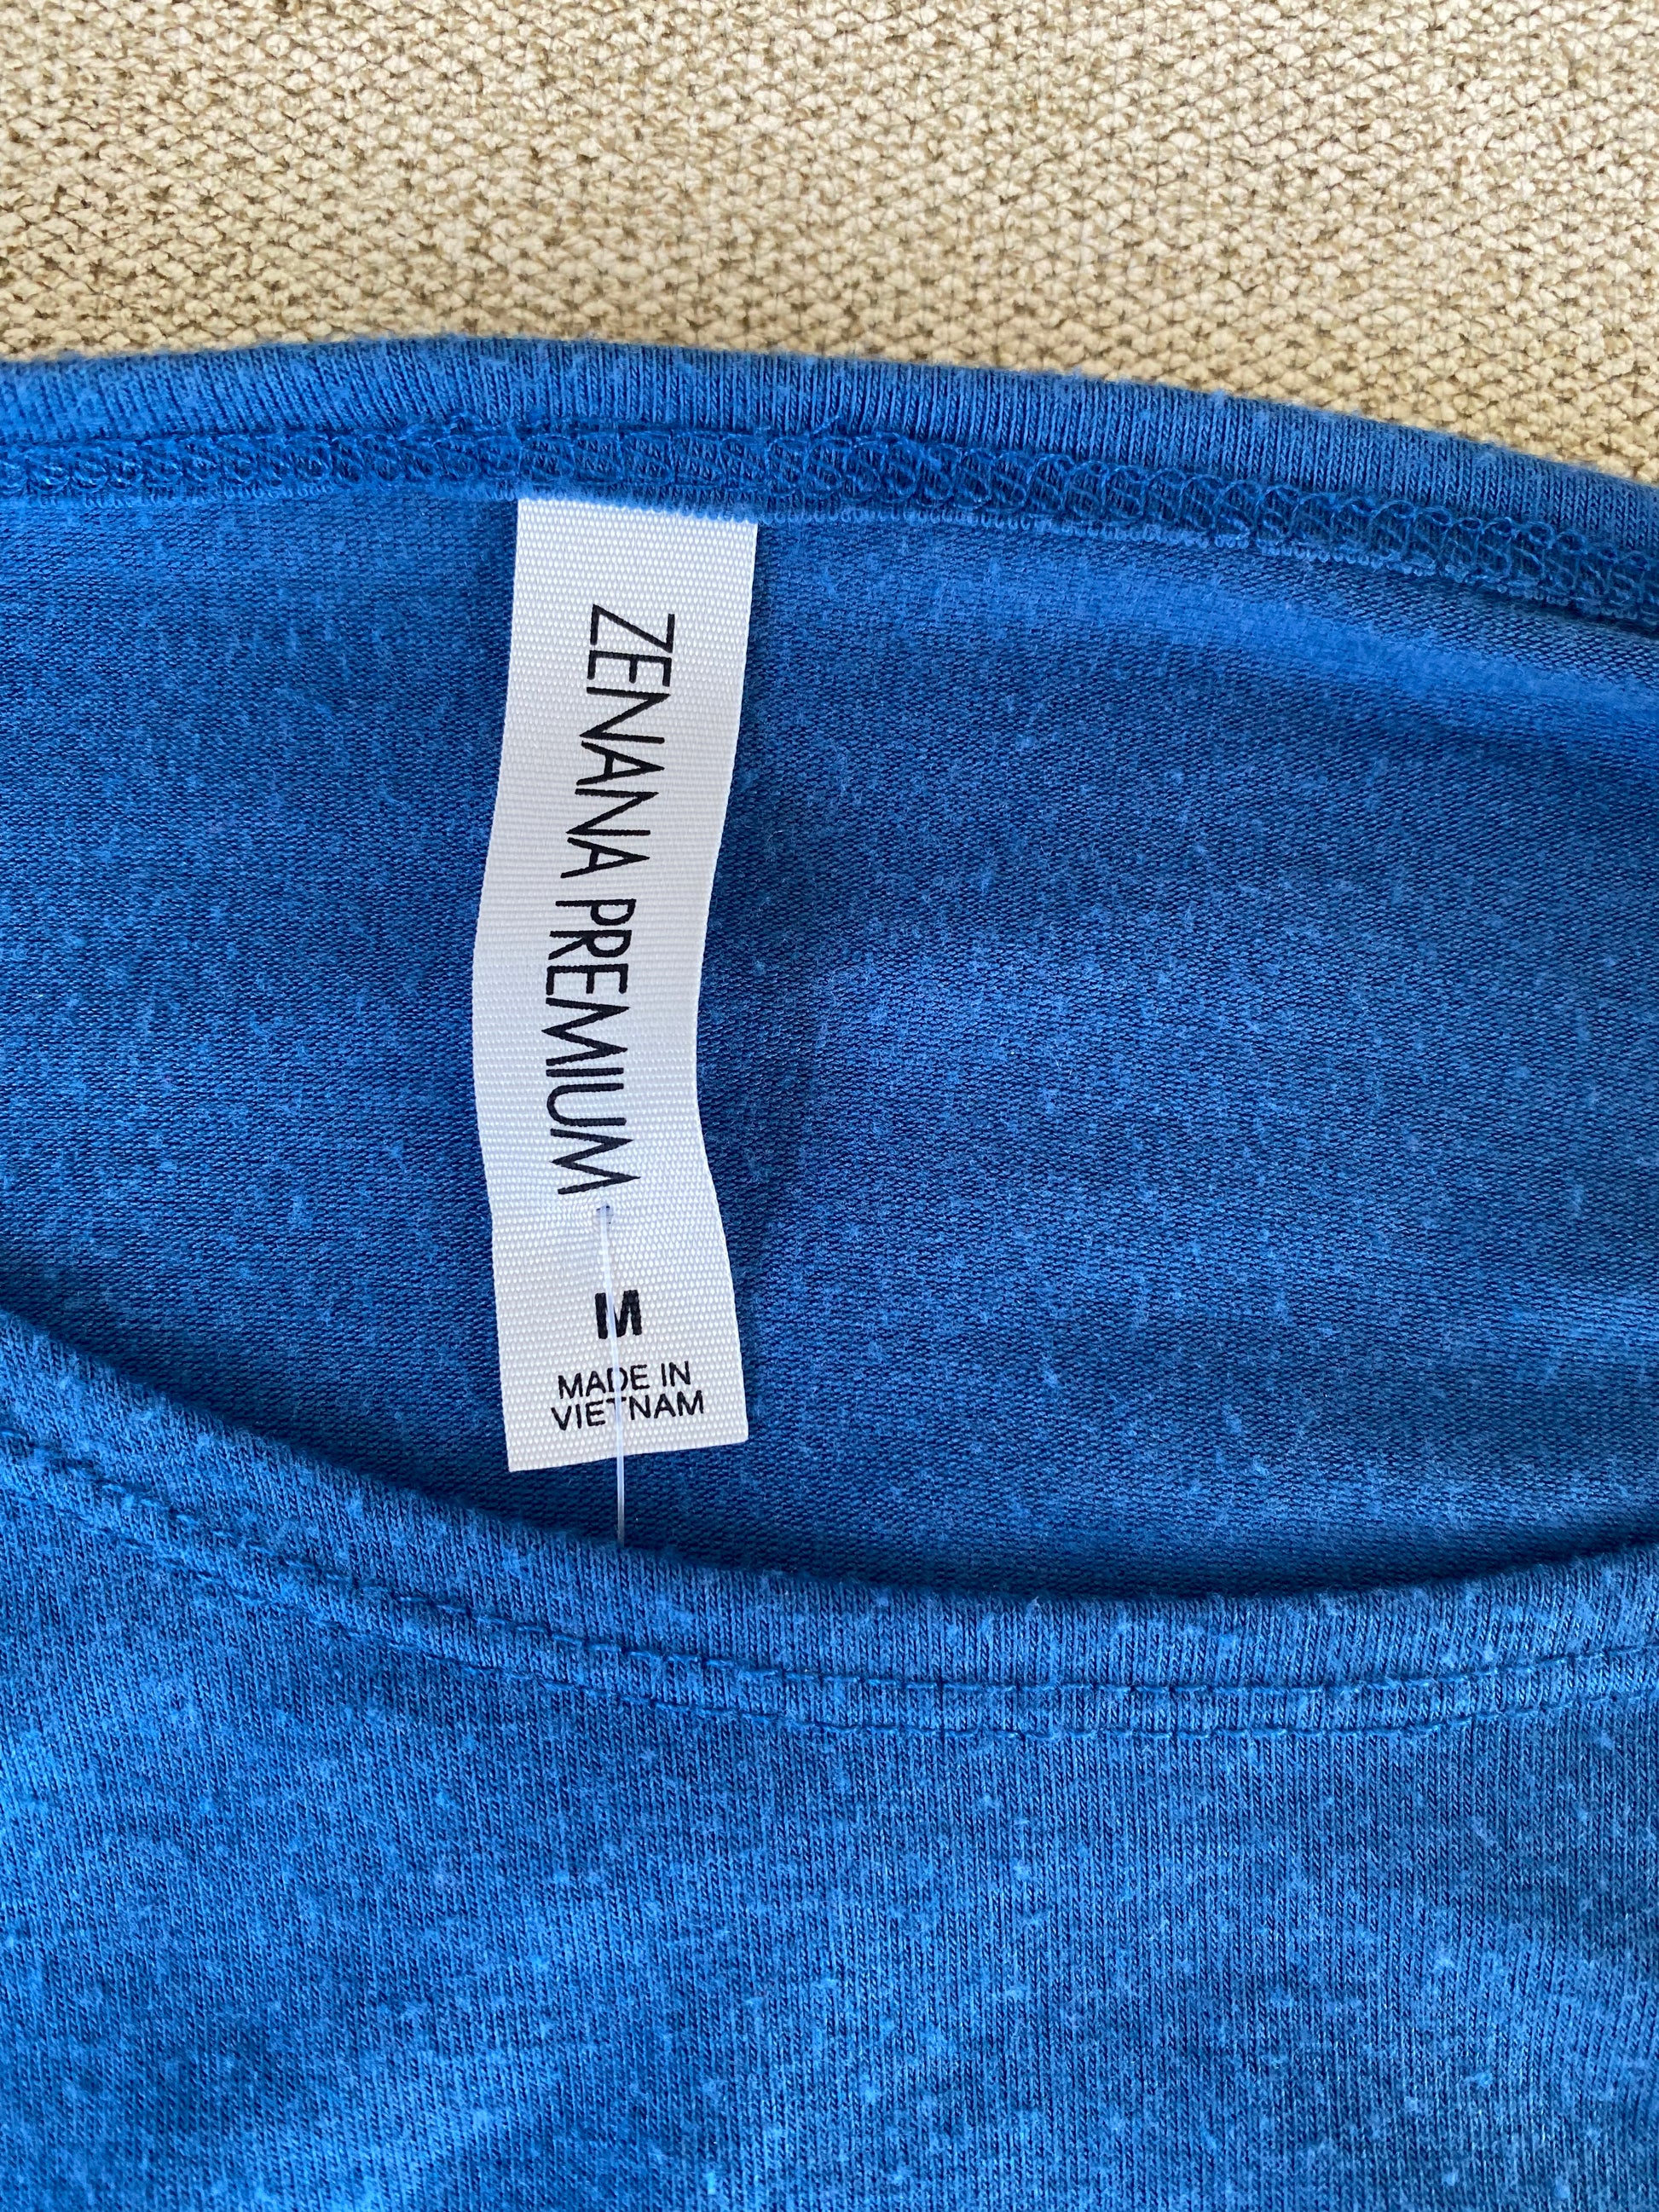 Zenana Premium Blue Knit Midi Dress – A